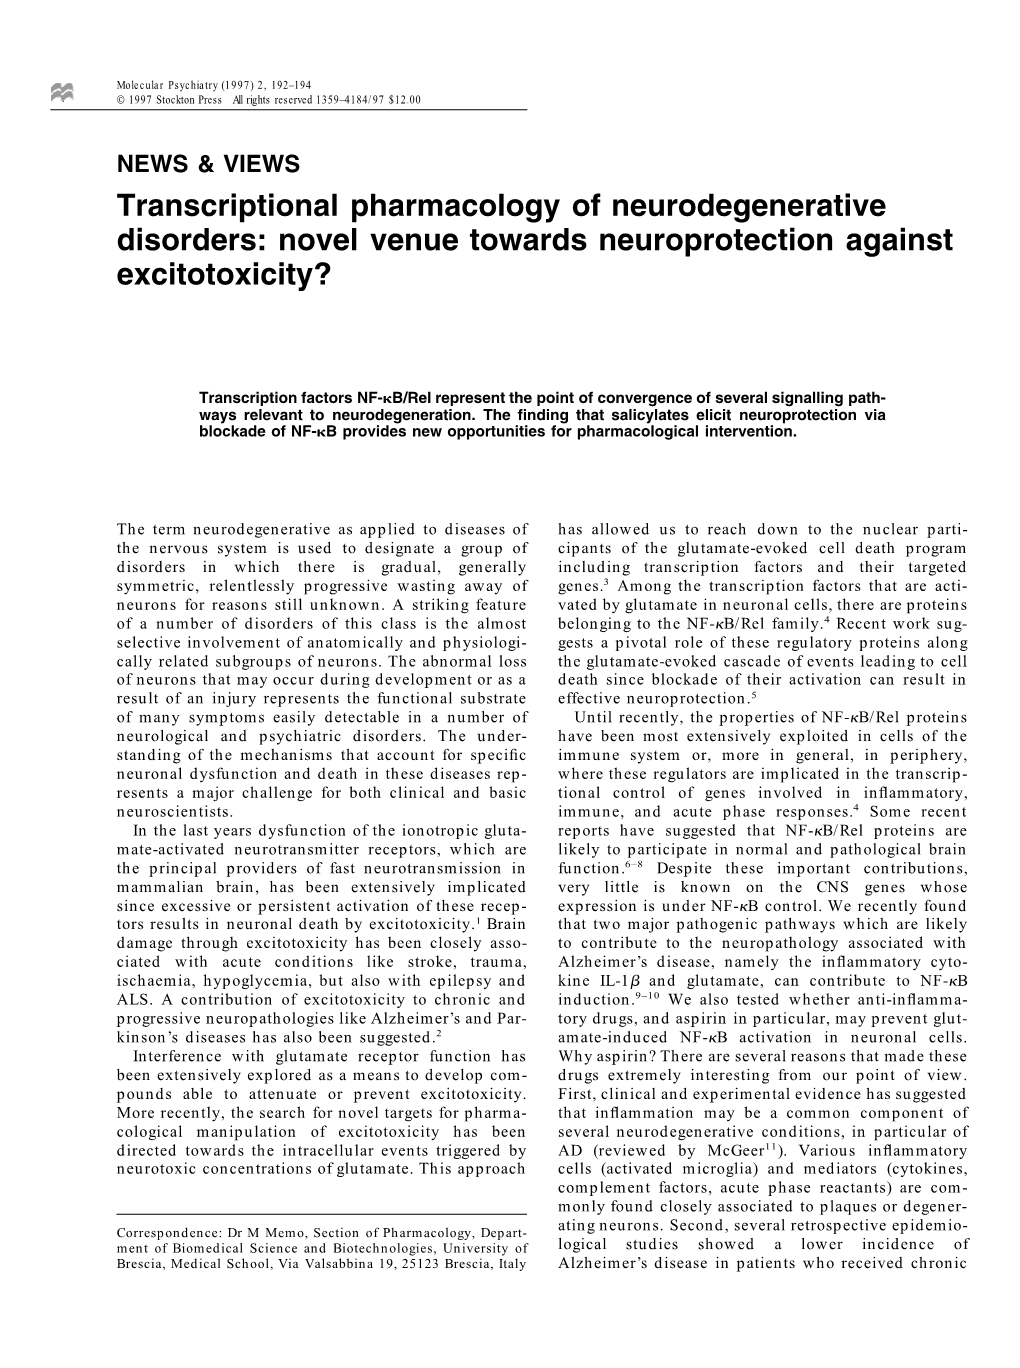 Transcriptional Pharmacology of Neurodegenerative Disorders: Novel Venue Towards Neuroprotection Against Excitotoxicity?